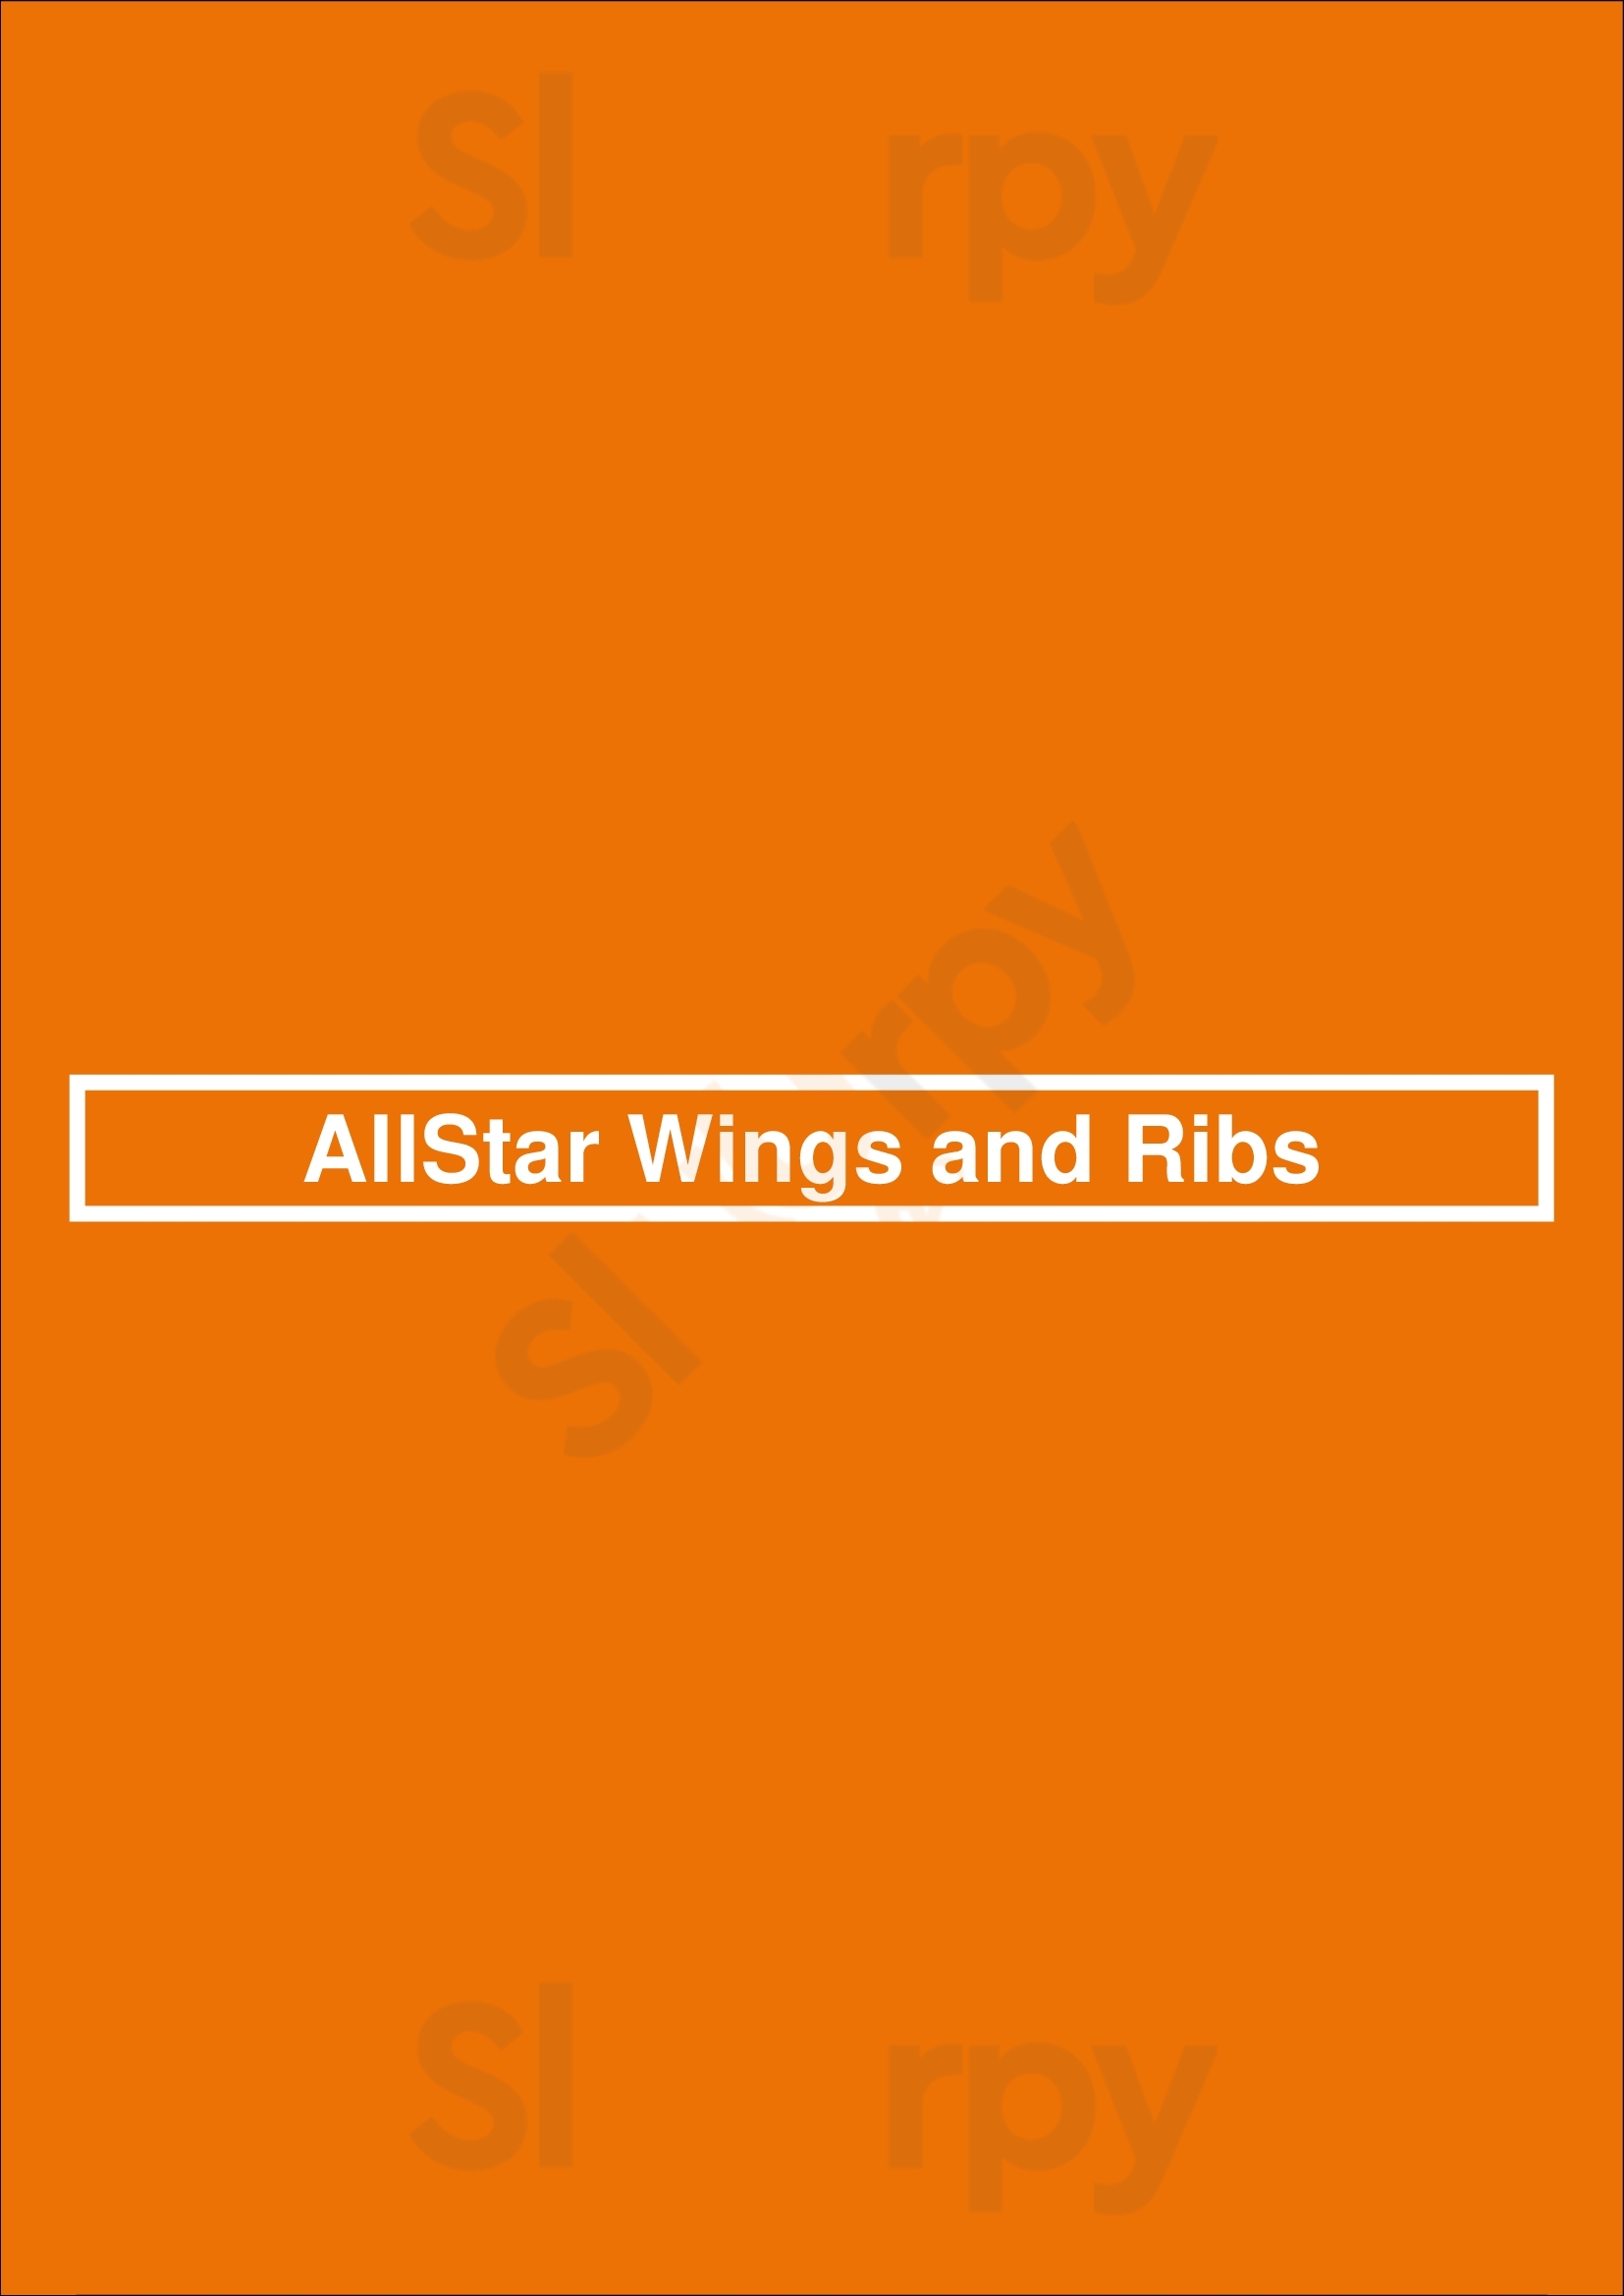 Allstar Wings And Ribs Pickering Menu - 1